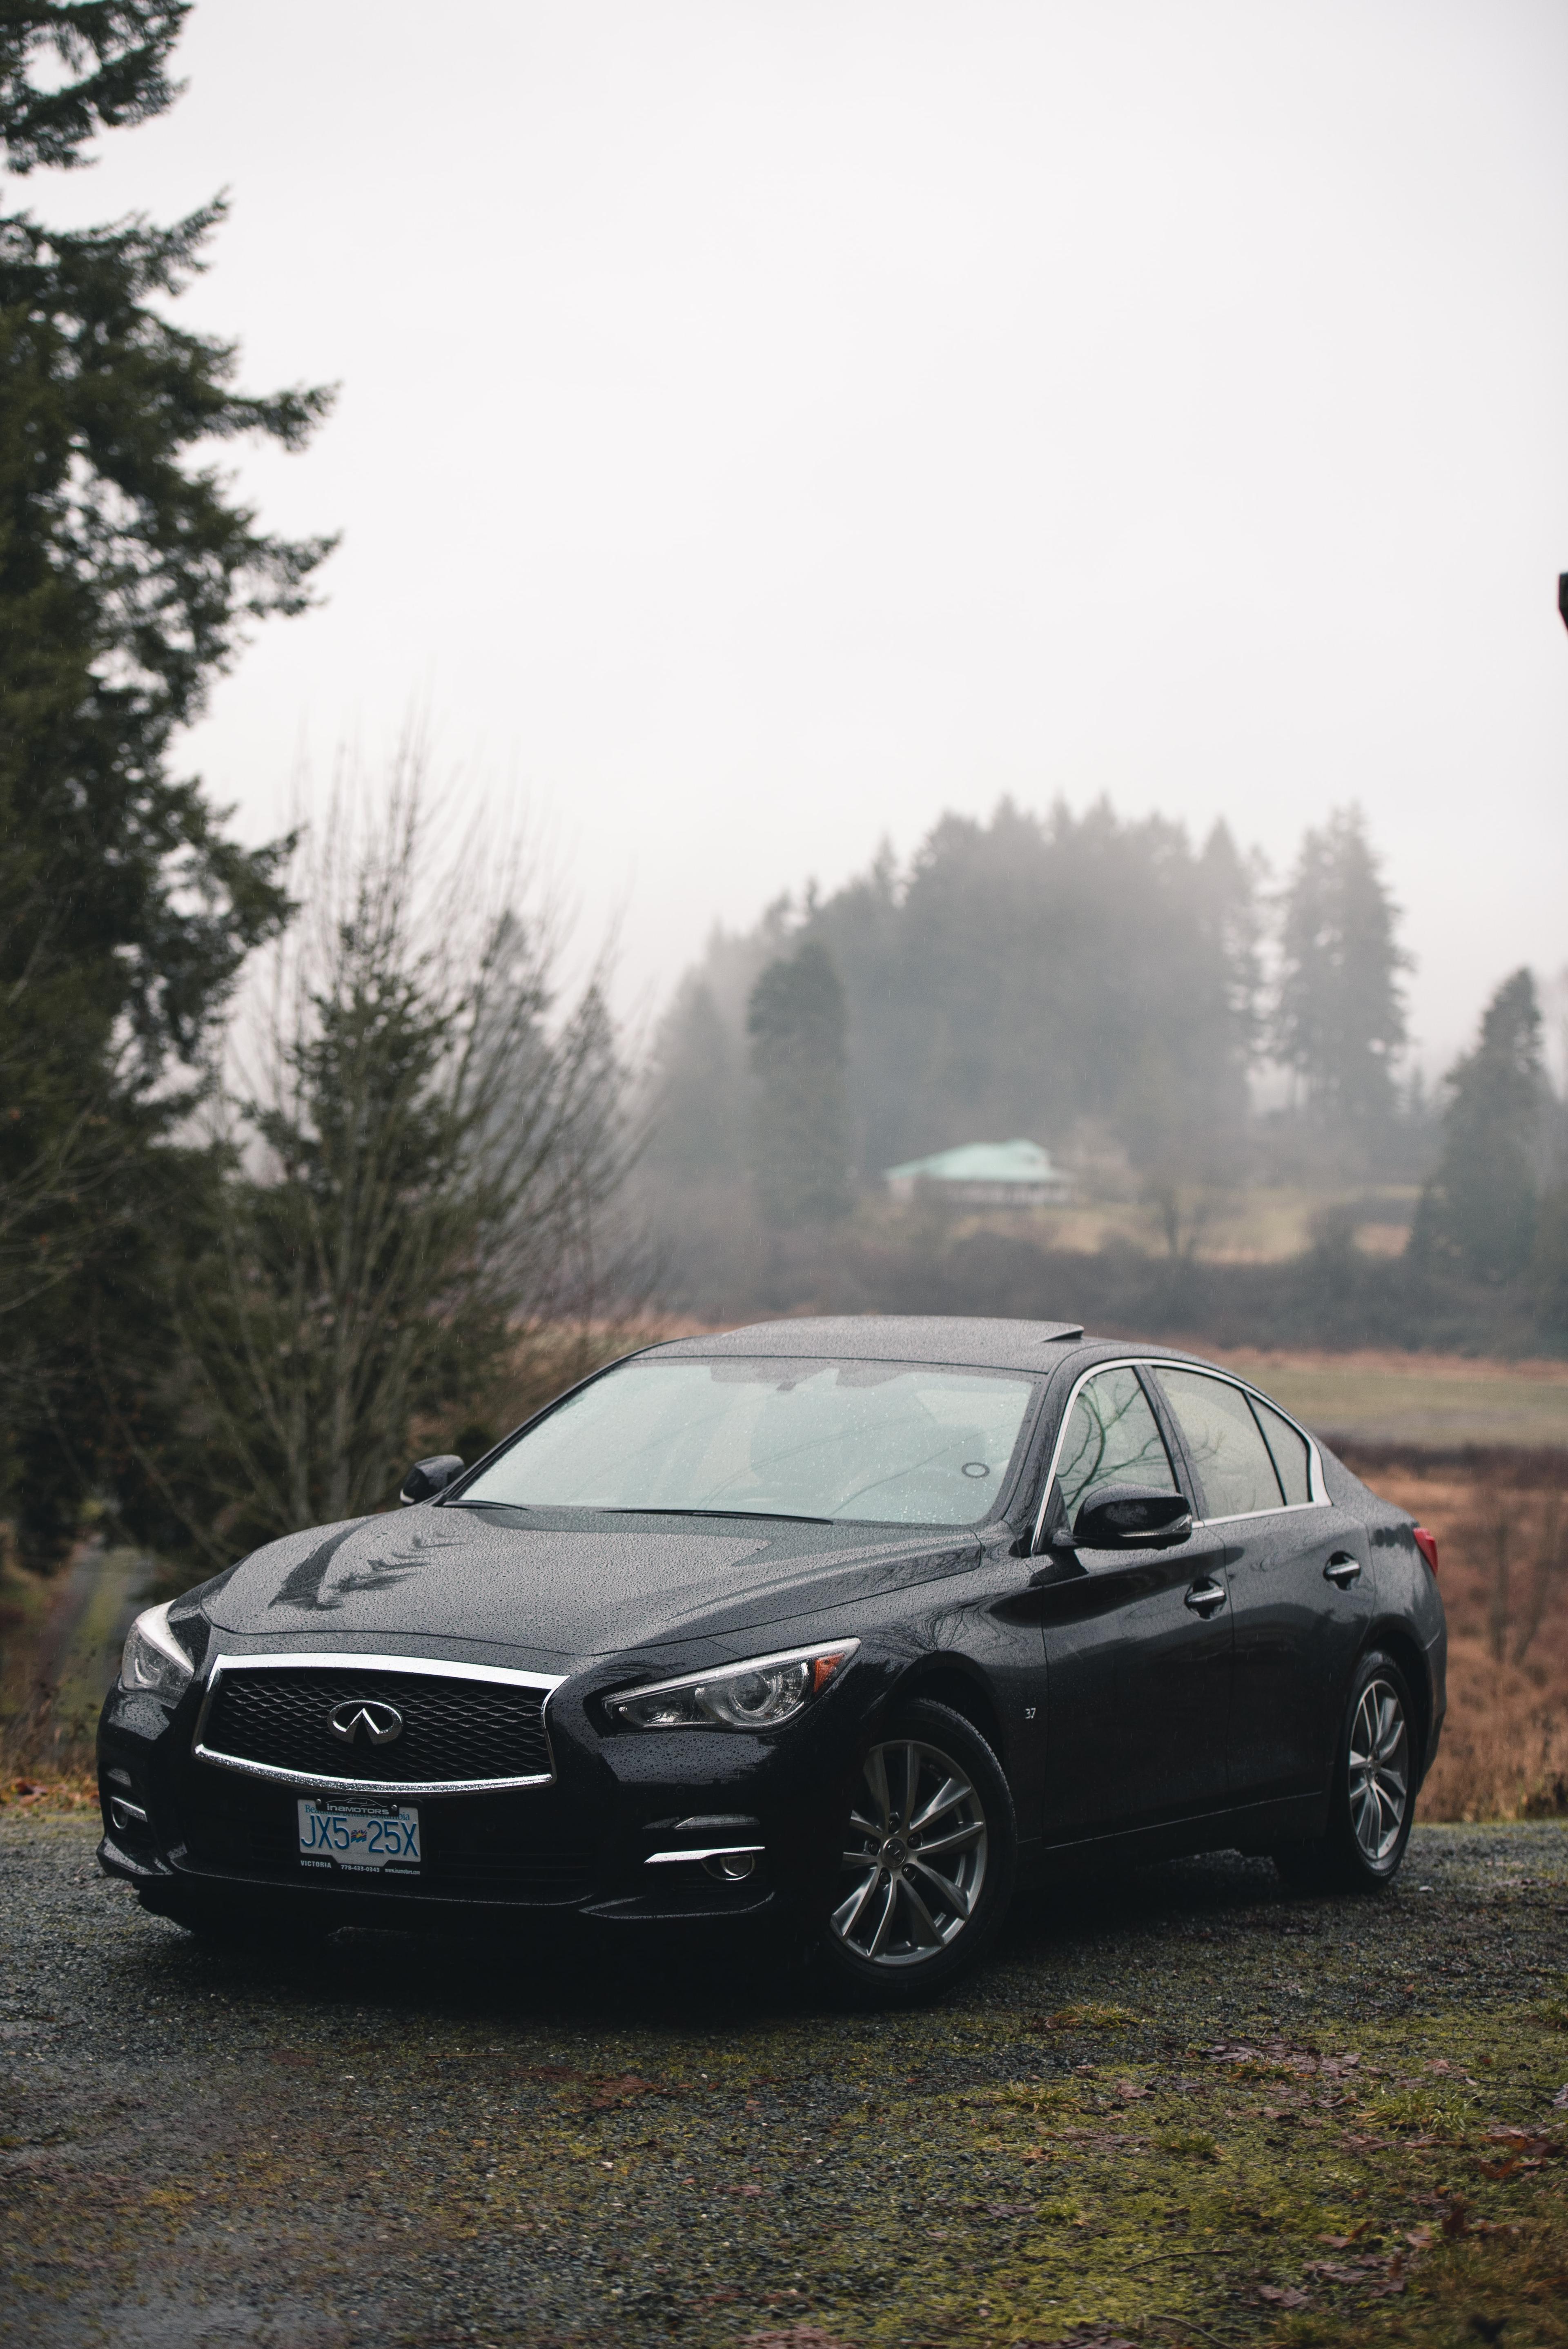 Black Q50 Infiniti on a foggy day. 